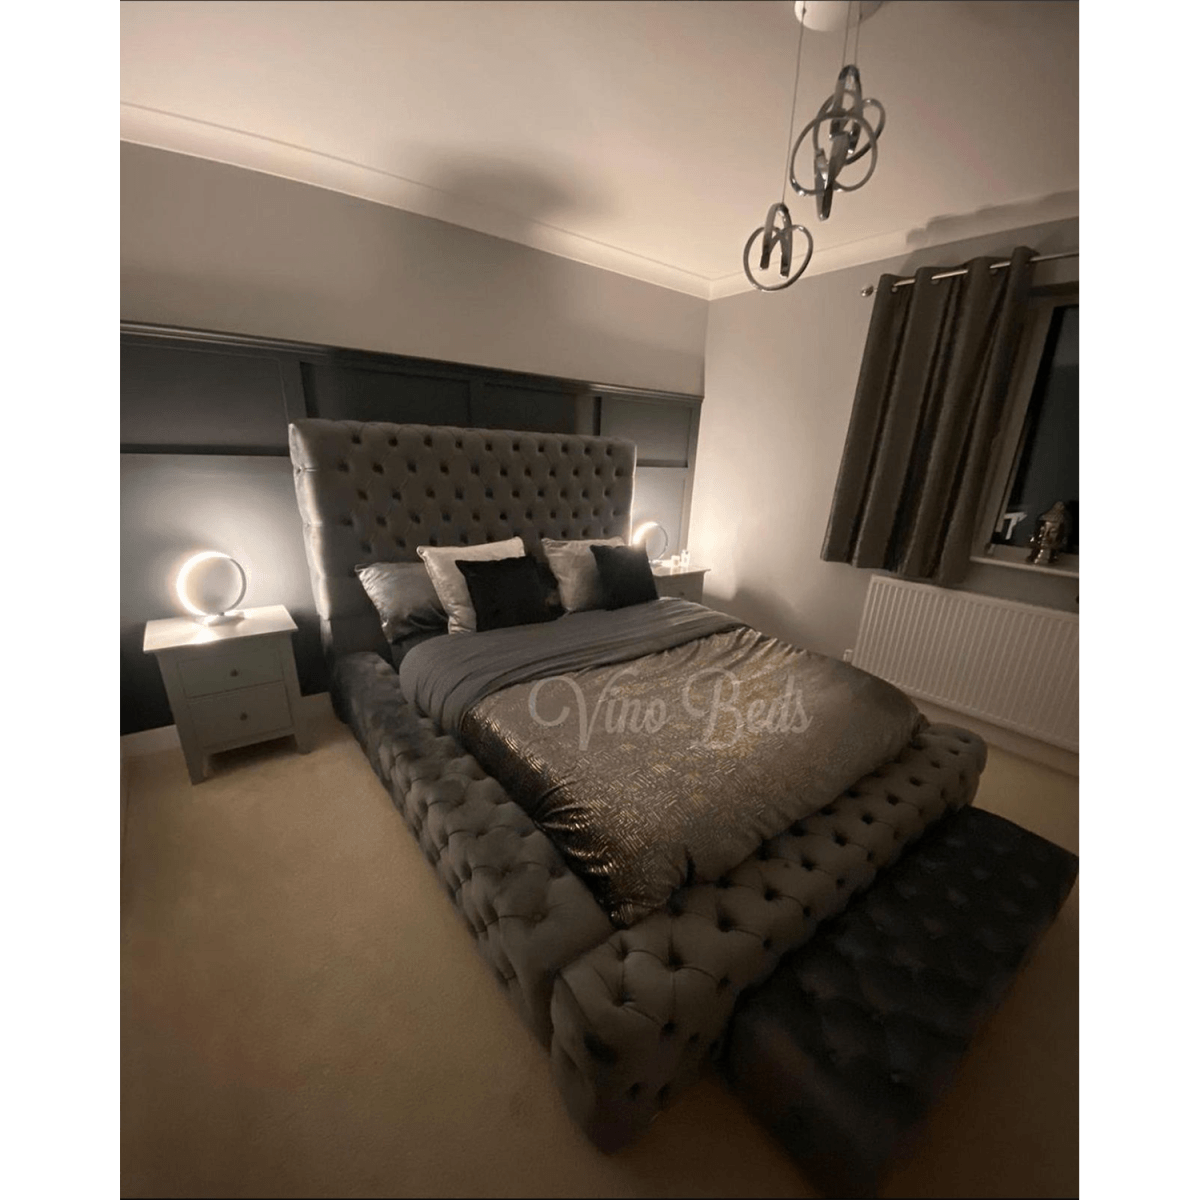 Parklane Luxury Bed - vinobeds